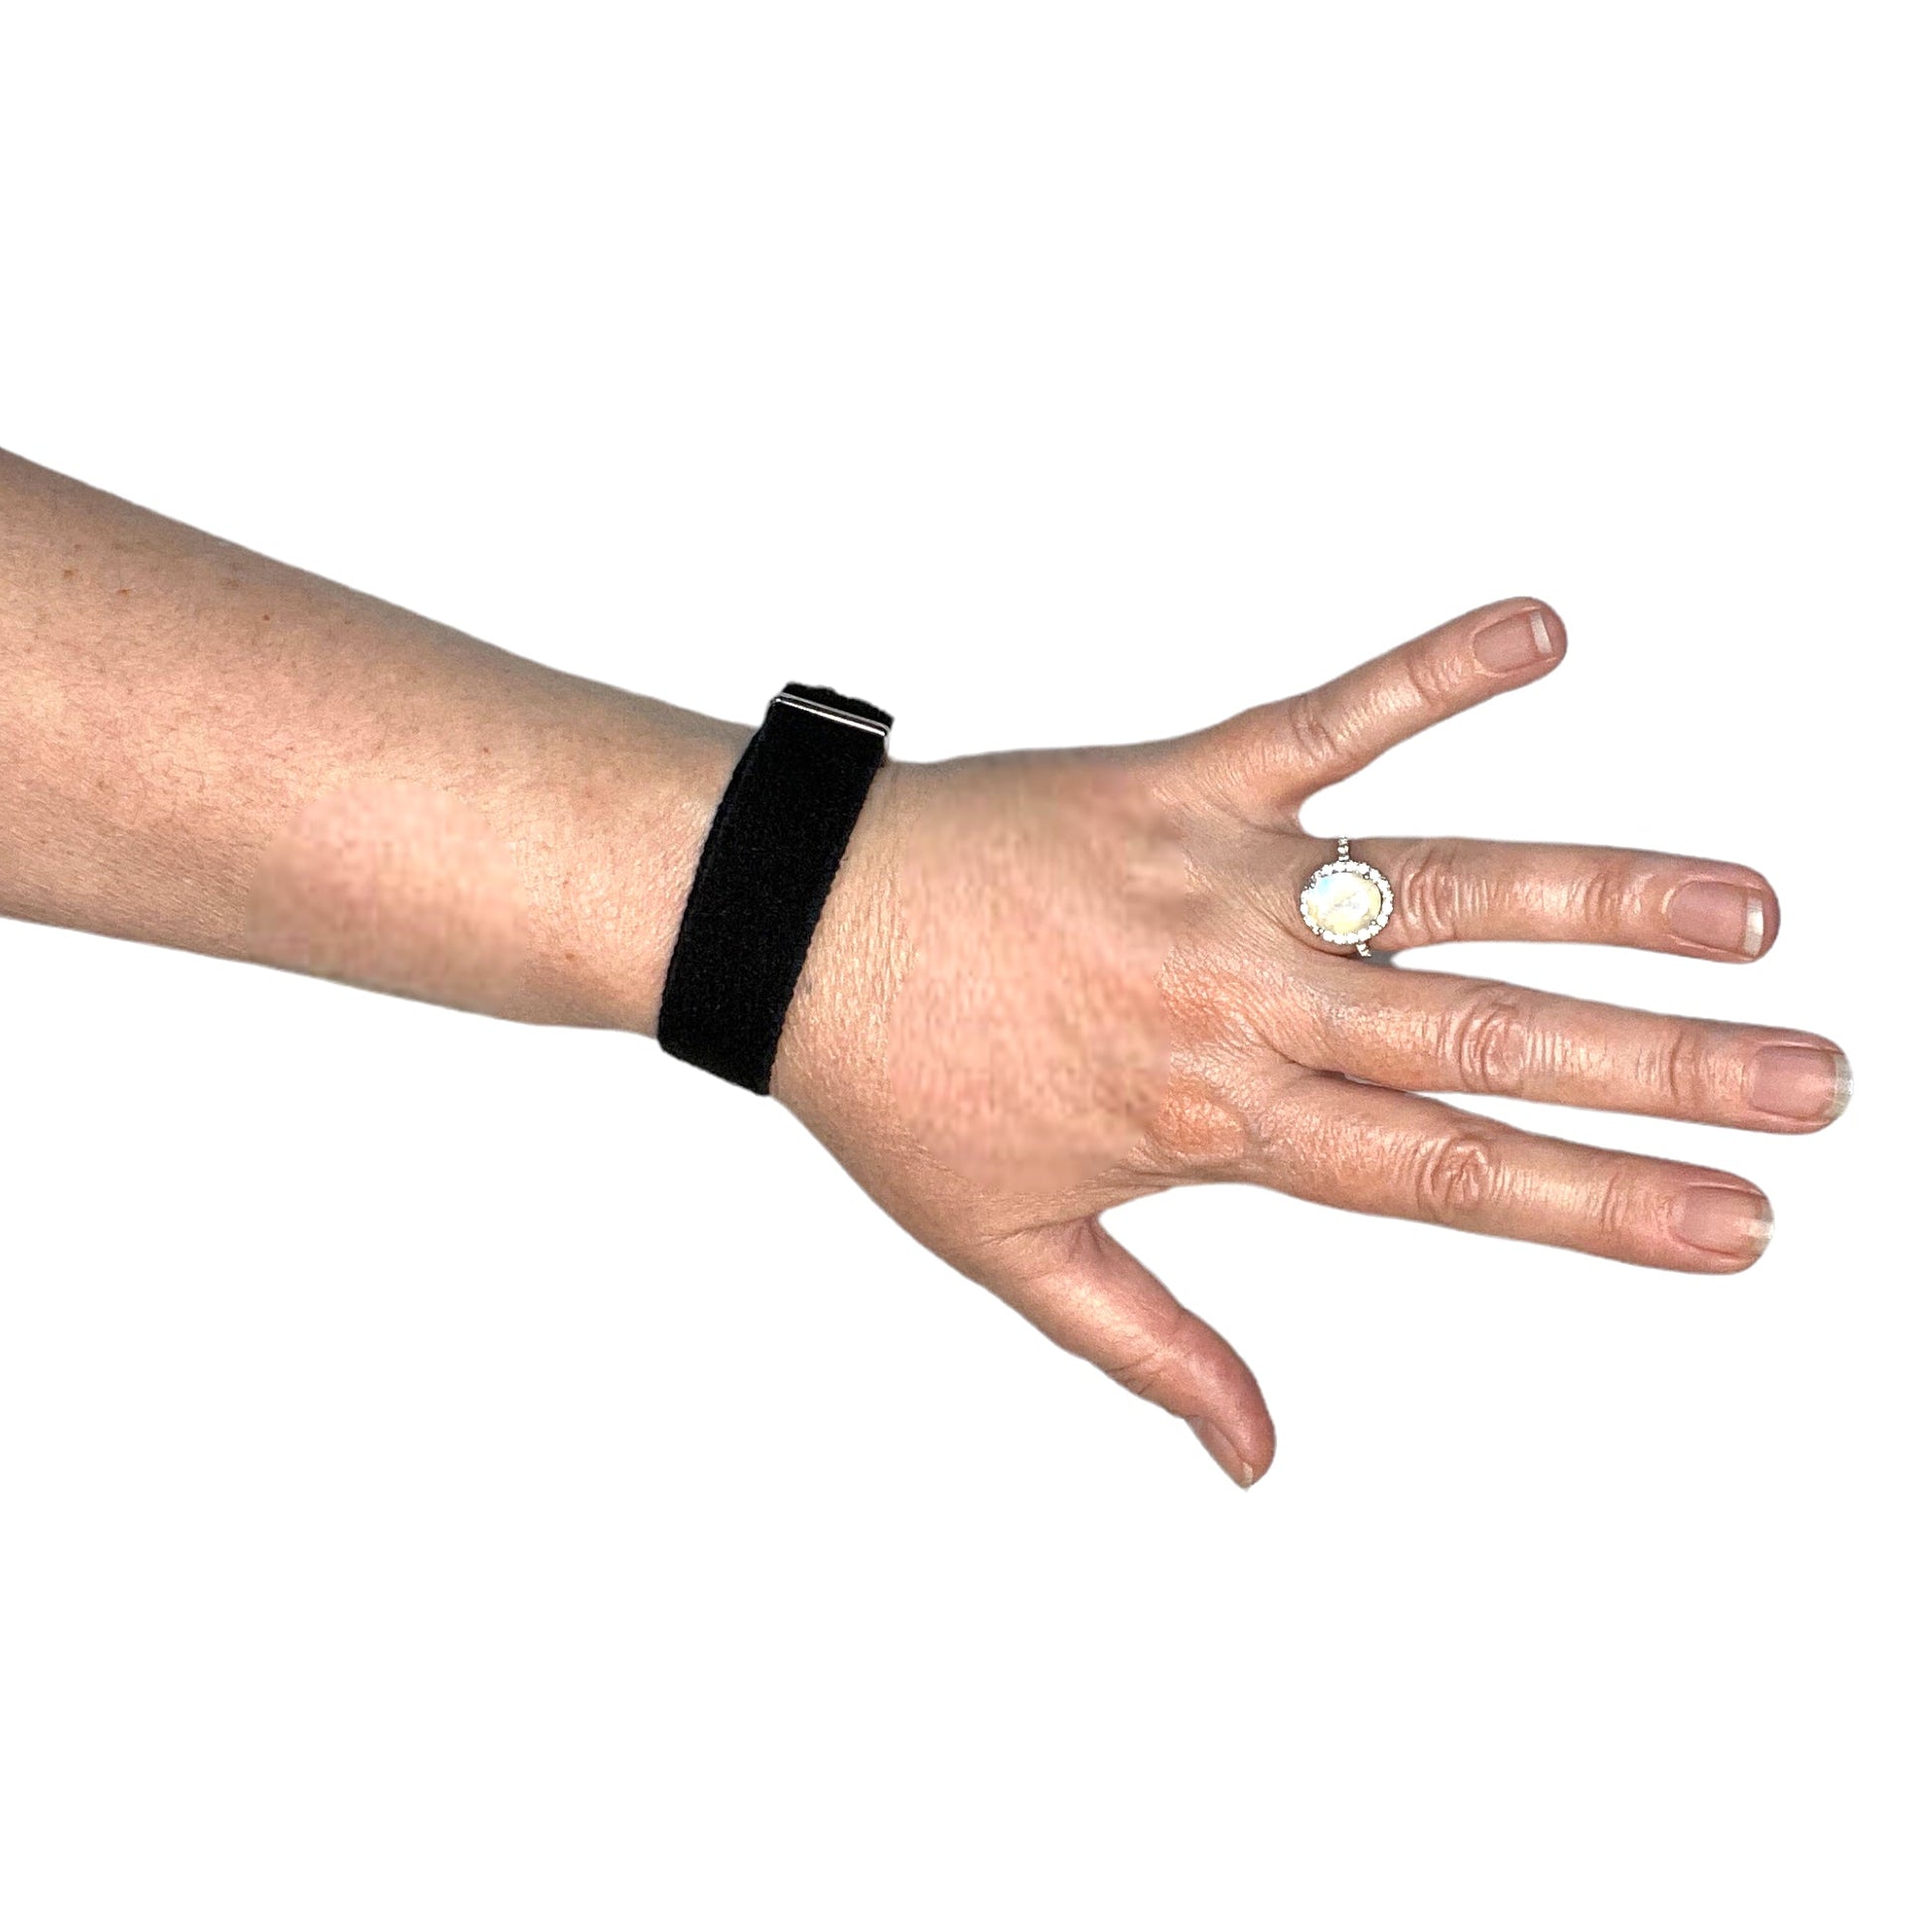 Hot Flash Bracelet-Menopause Relief Acupressure Band-Anxiety-Vertigo-Single - Acupressure Bracelets